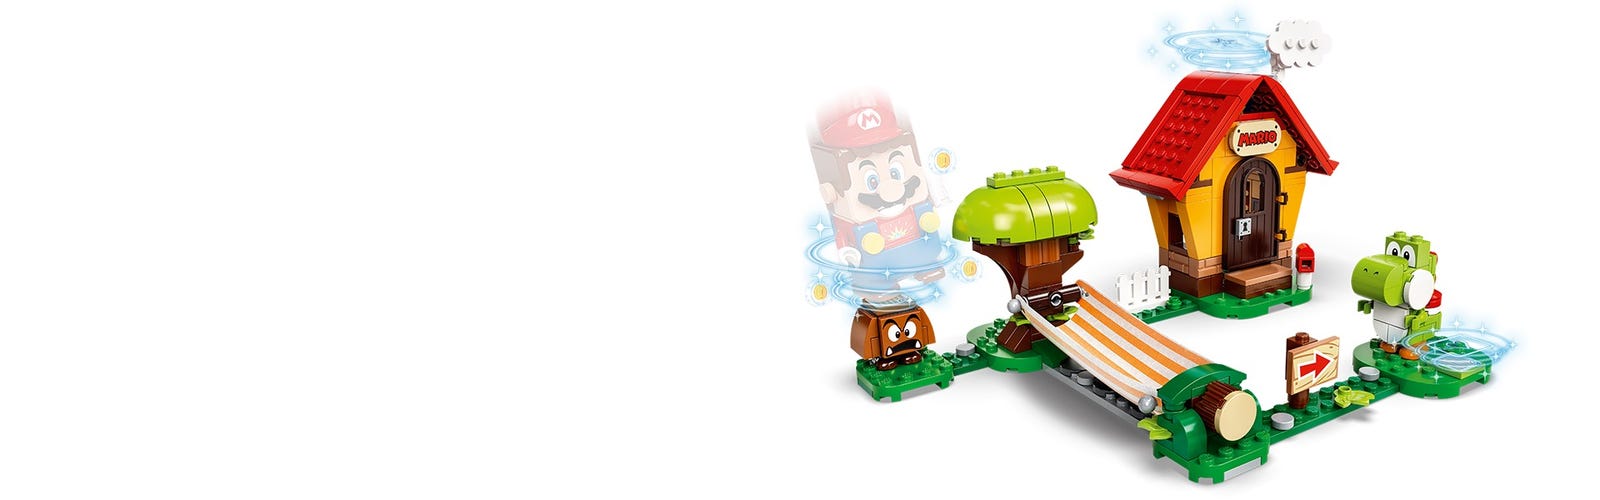 71367 LEGO® Super Mario™ Mario's House & Yoshi Expansion Set, 205 pc -  Fry's Food Stores